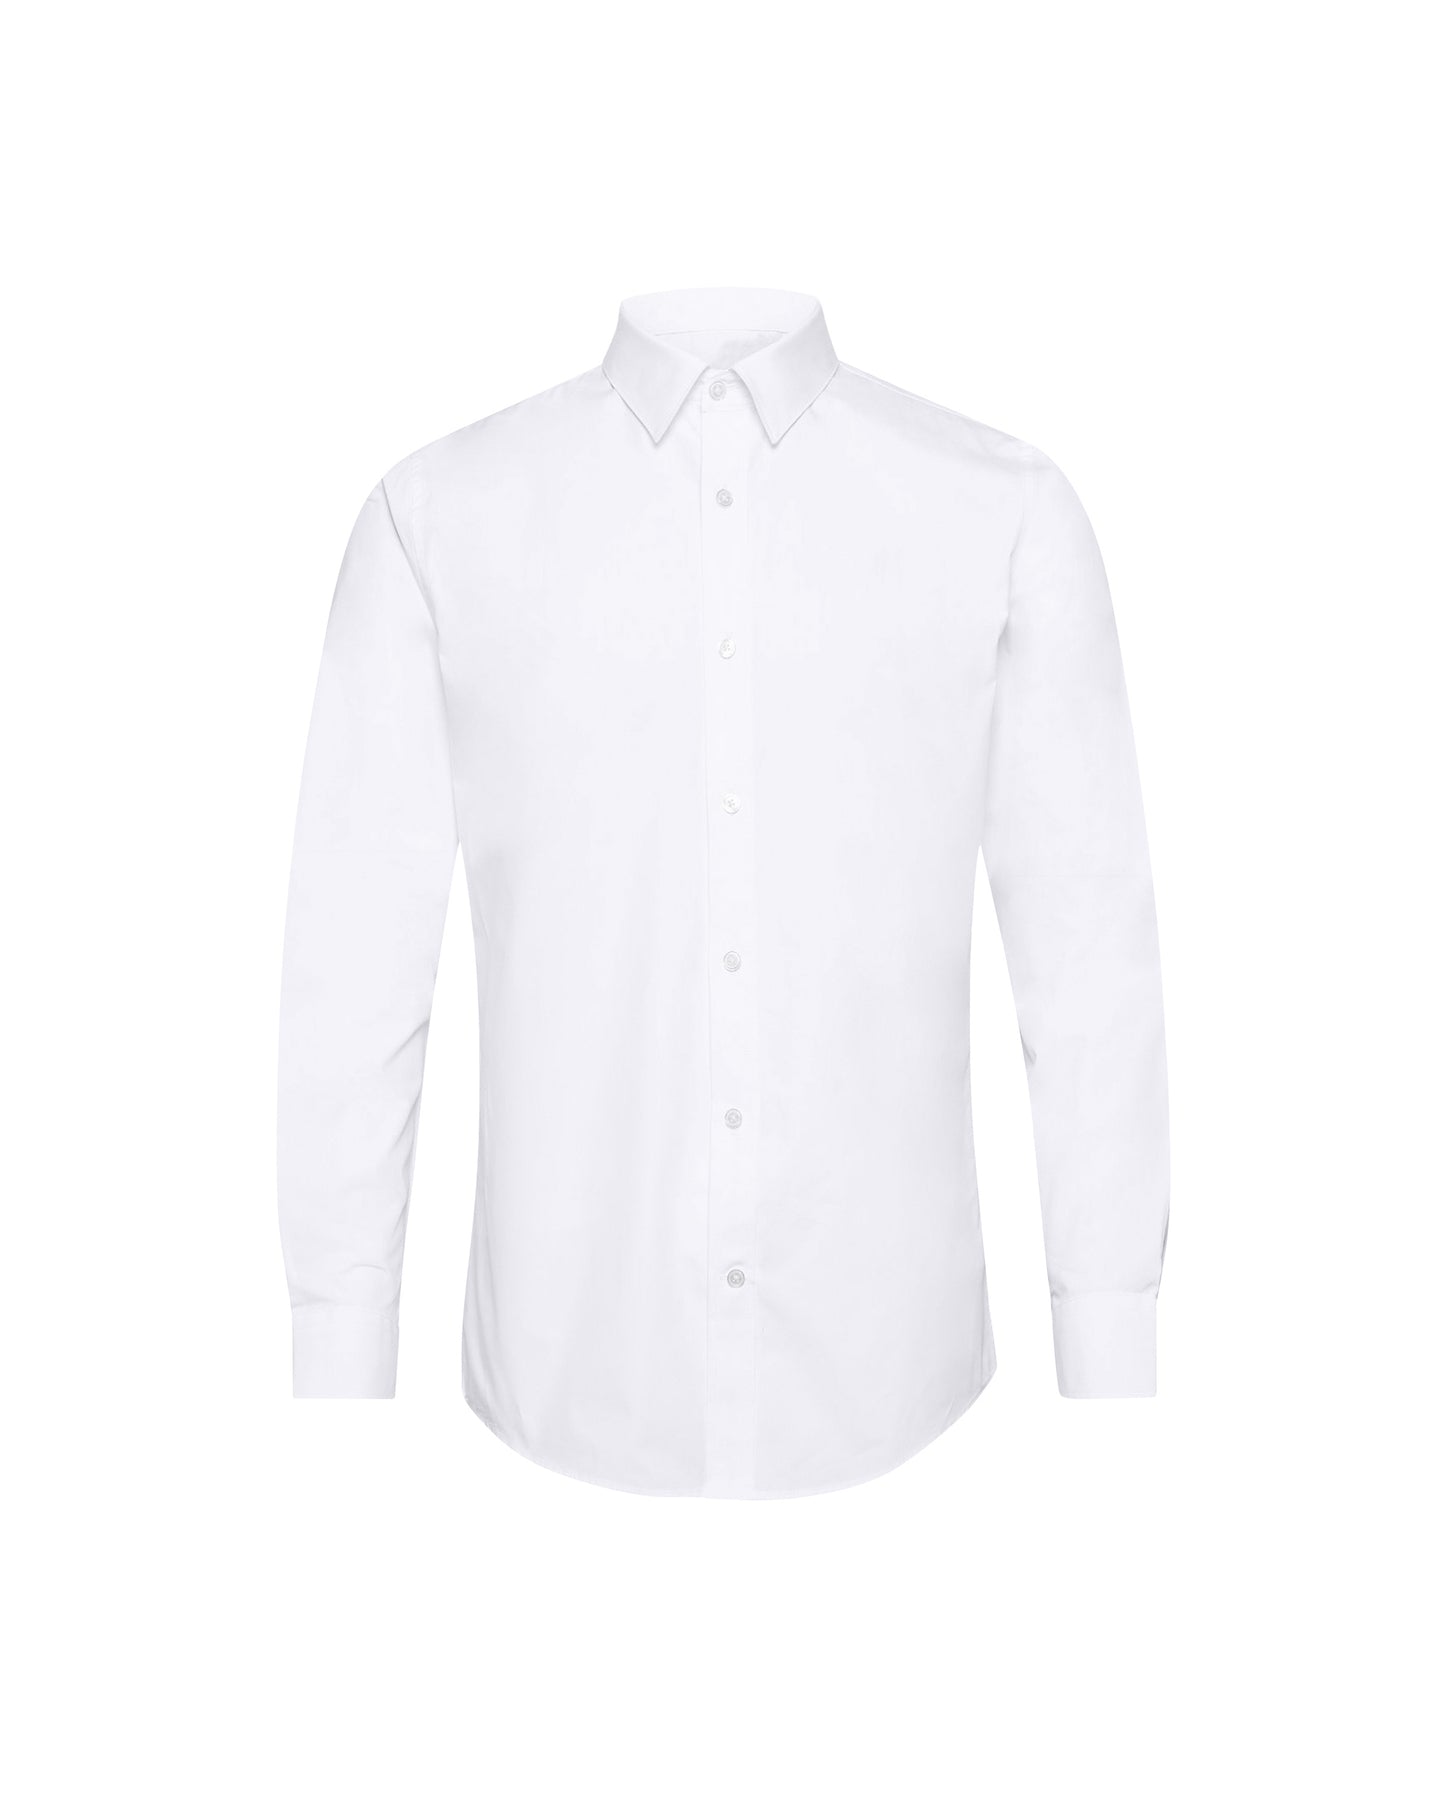 White Twill Natural Stretch Cotton French Cuff Dress Shirt